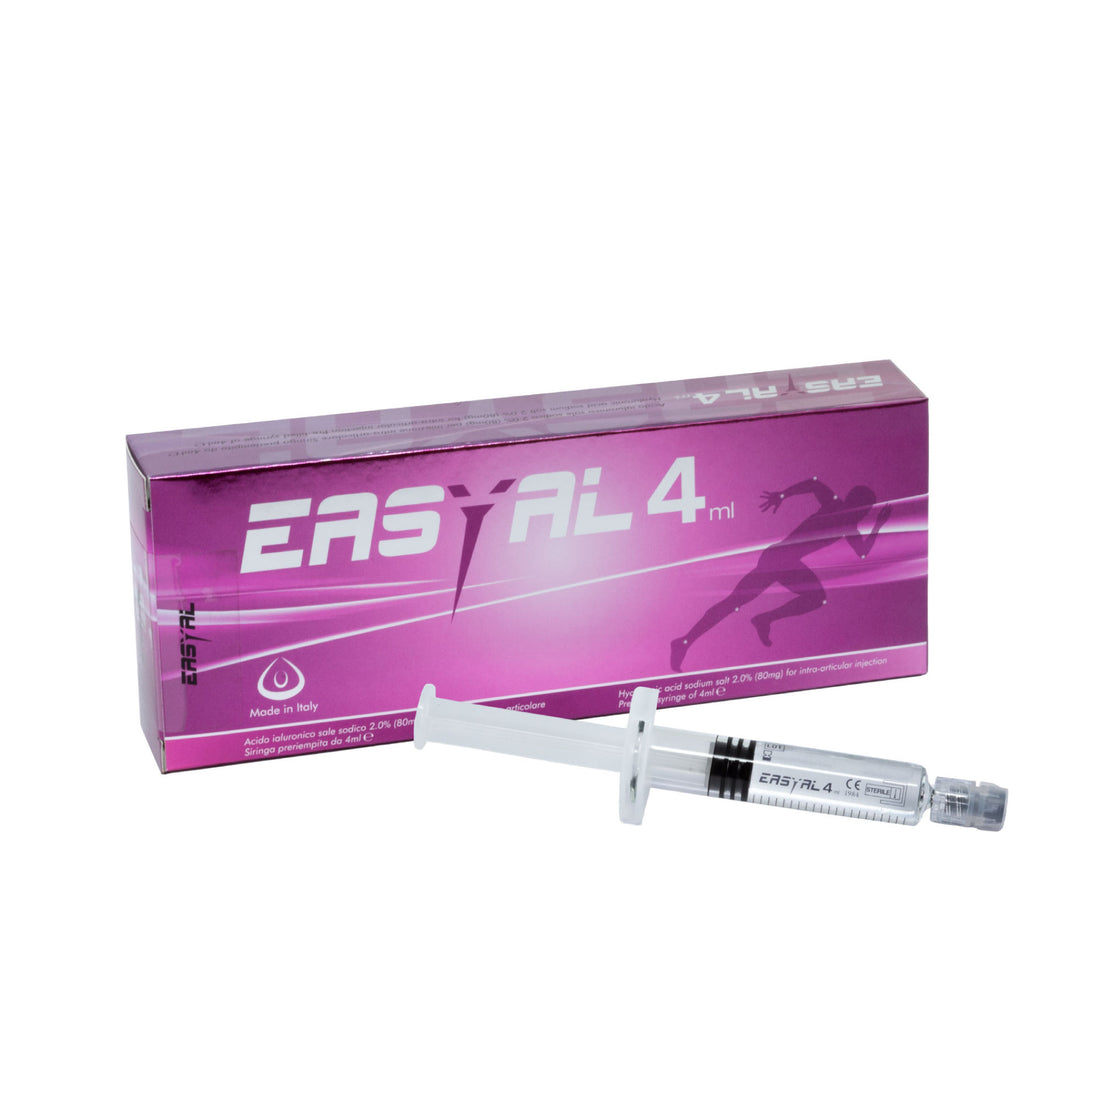 EASYAL 4ml - Αλάτι υαλουρονικού οξέος - Θεραπεία για εκφυλιστικές / φλεγμονώδεις παθήσεις των αρθρώσεων